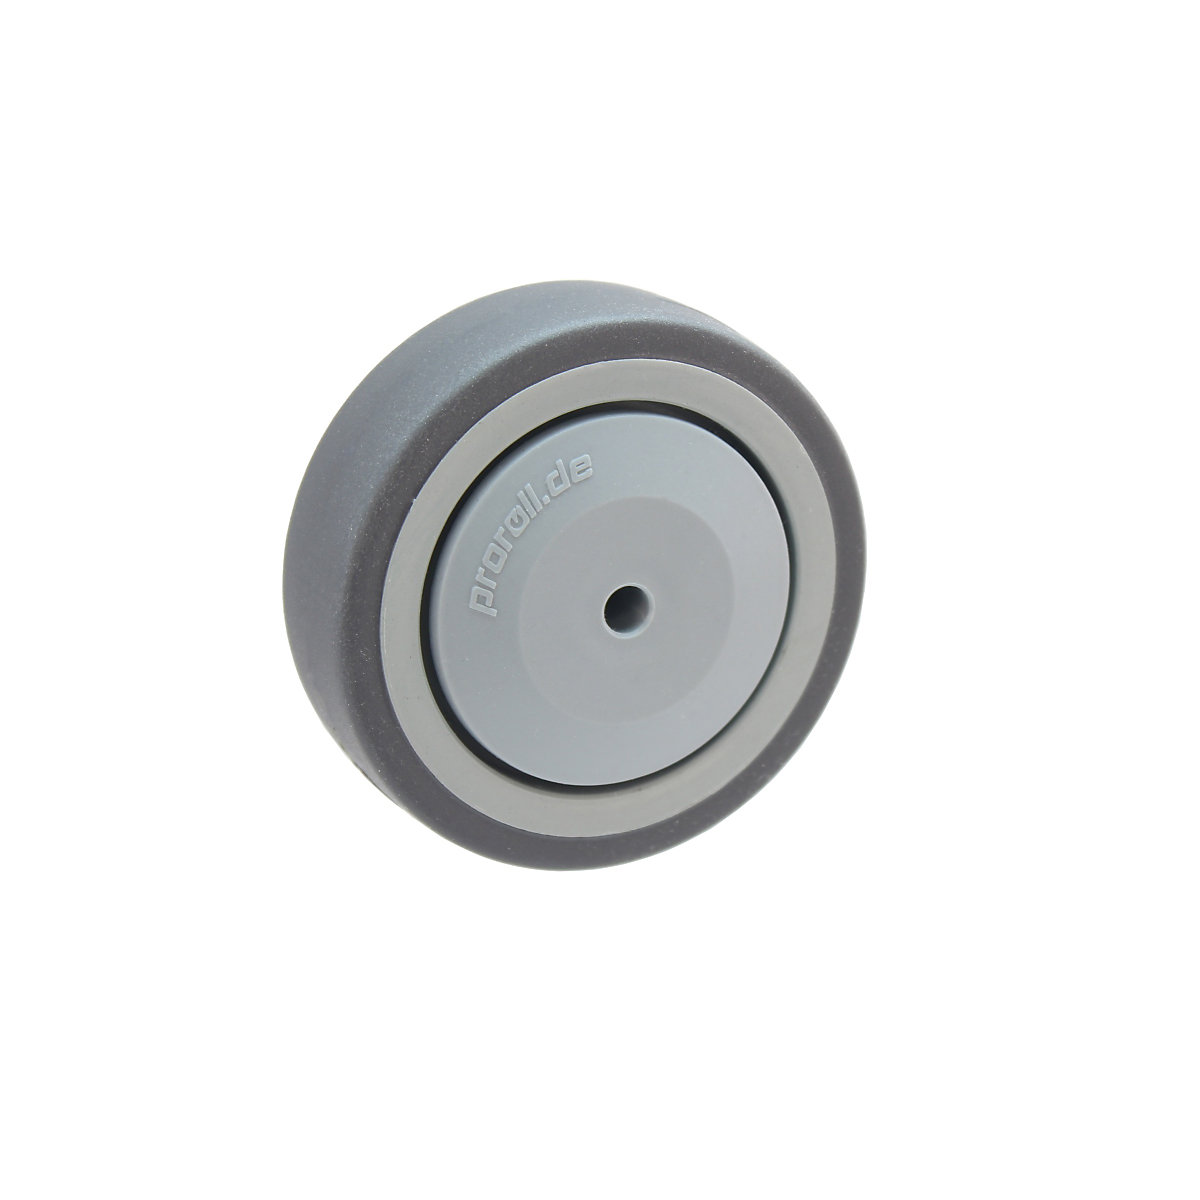 Kolo iz termoplastične gume – Proroll, kroglični ležaj, Ø x širina kolesa 100 x 32 mm-3